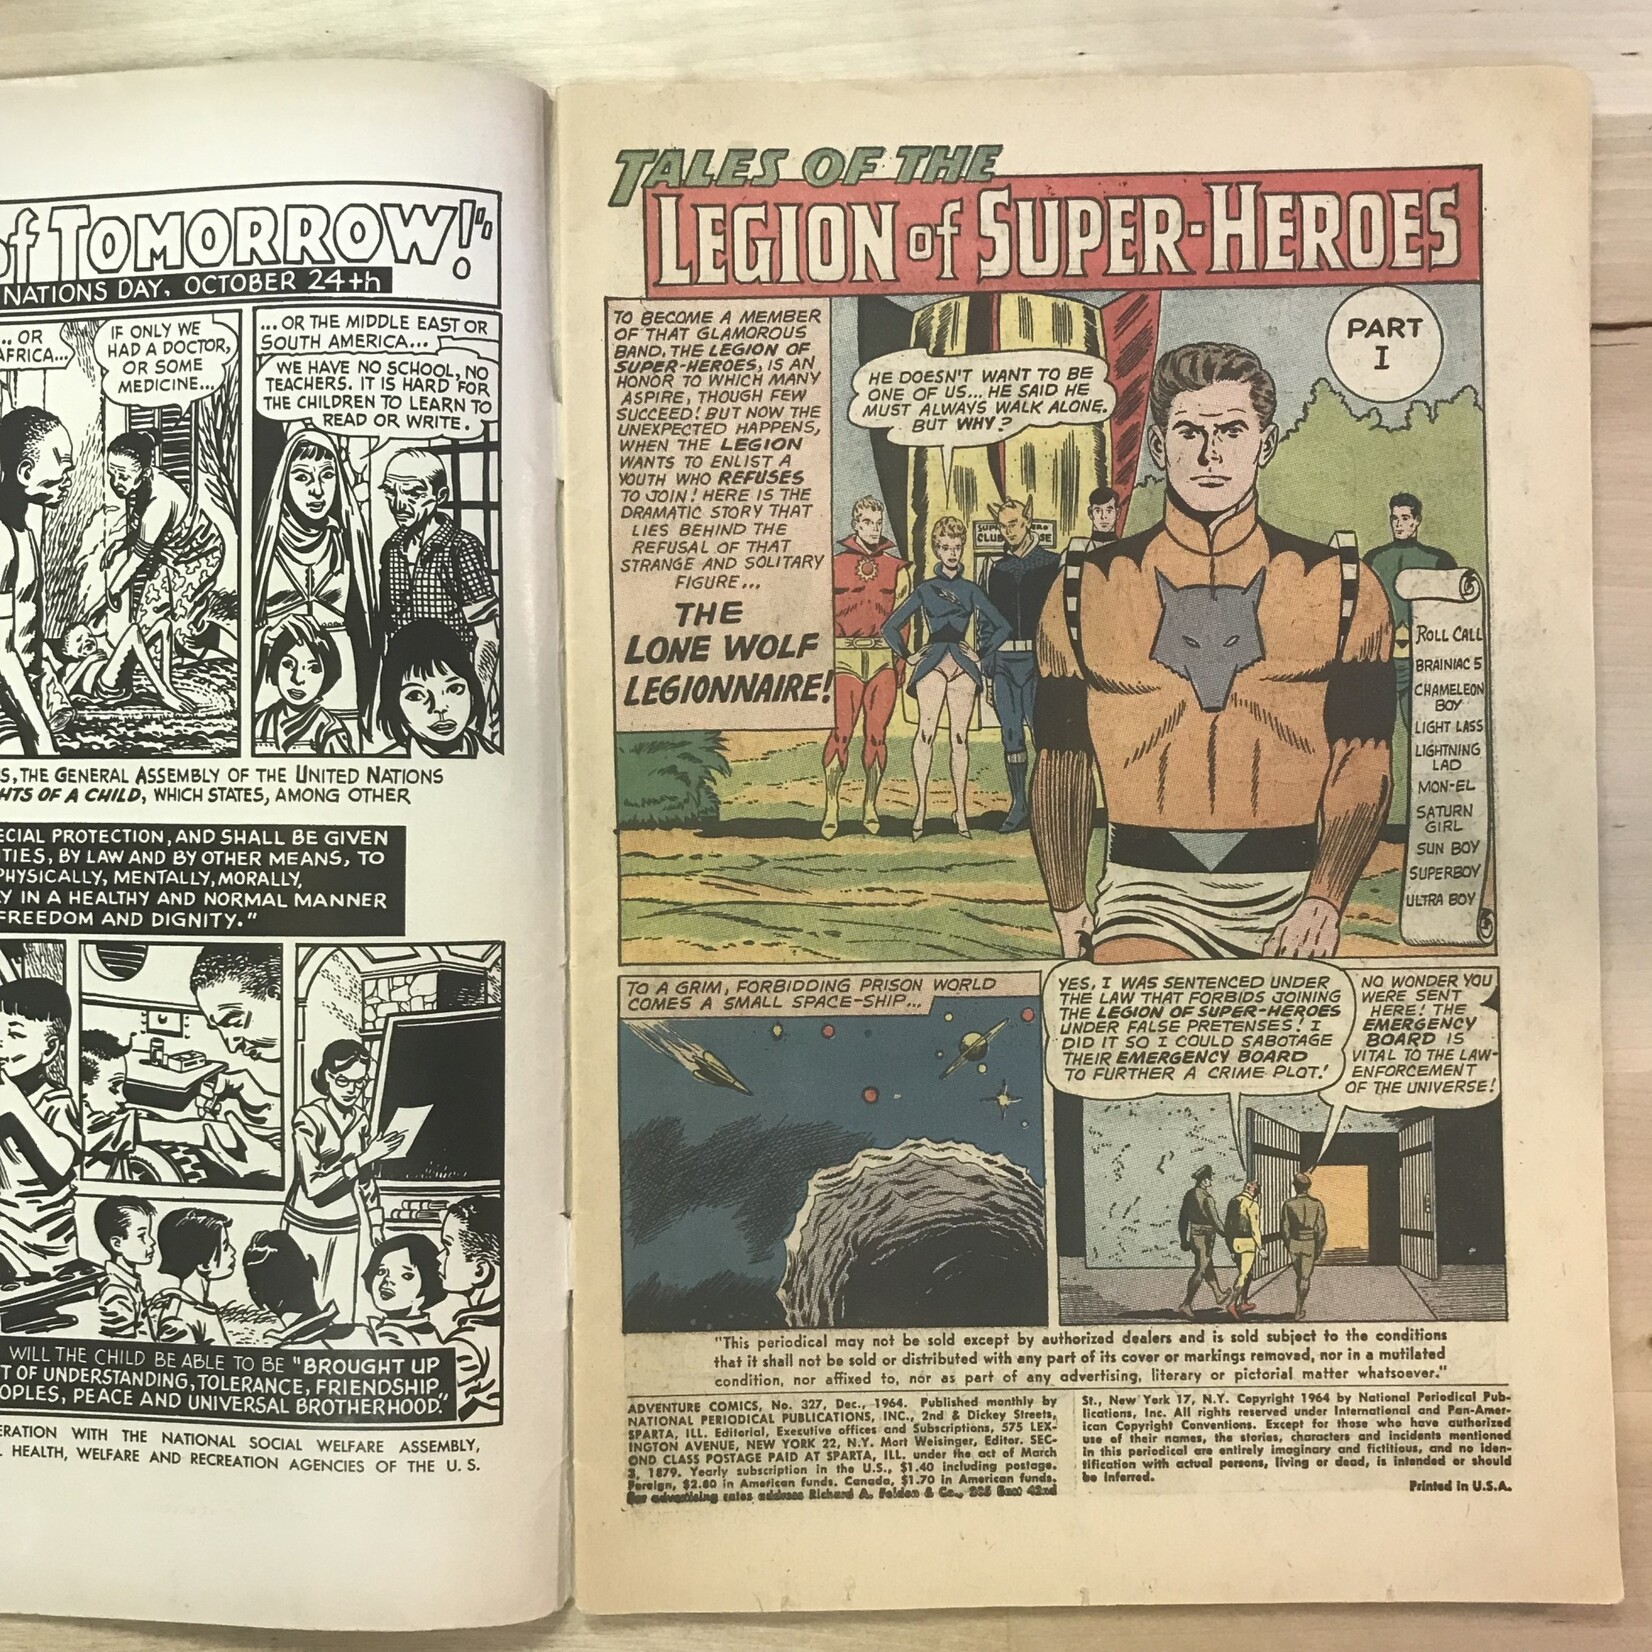 Adventure Comics - Superboy & The Legion Of Super-Heroes - #327 December 1964 - Comic Book